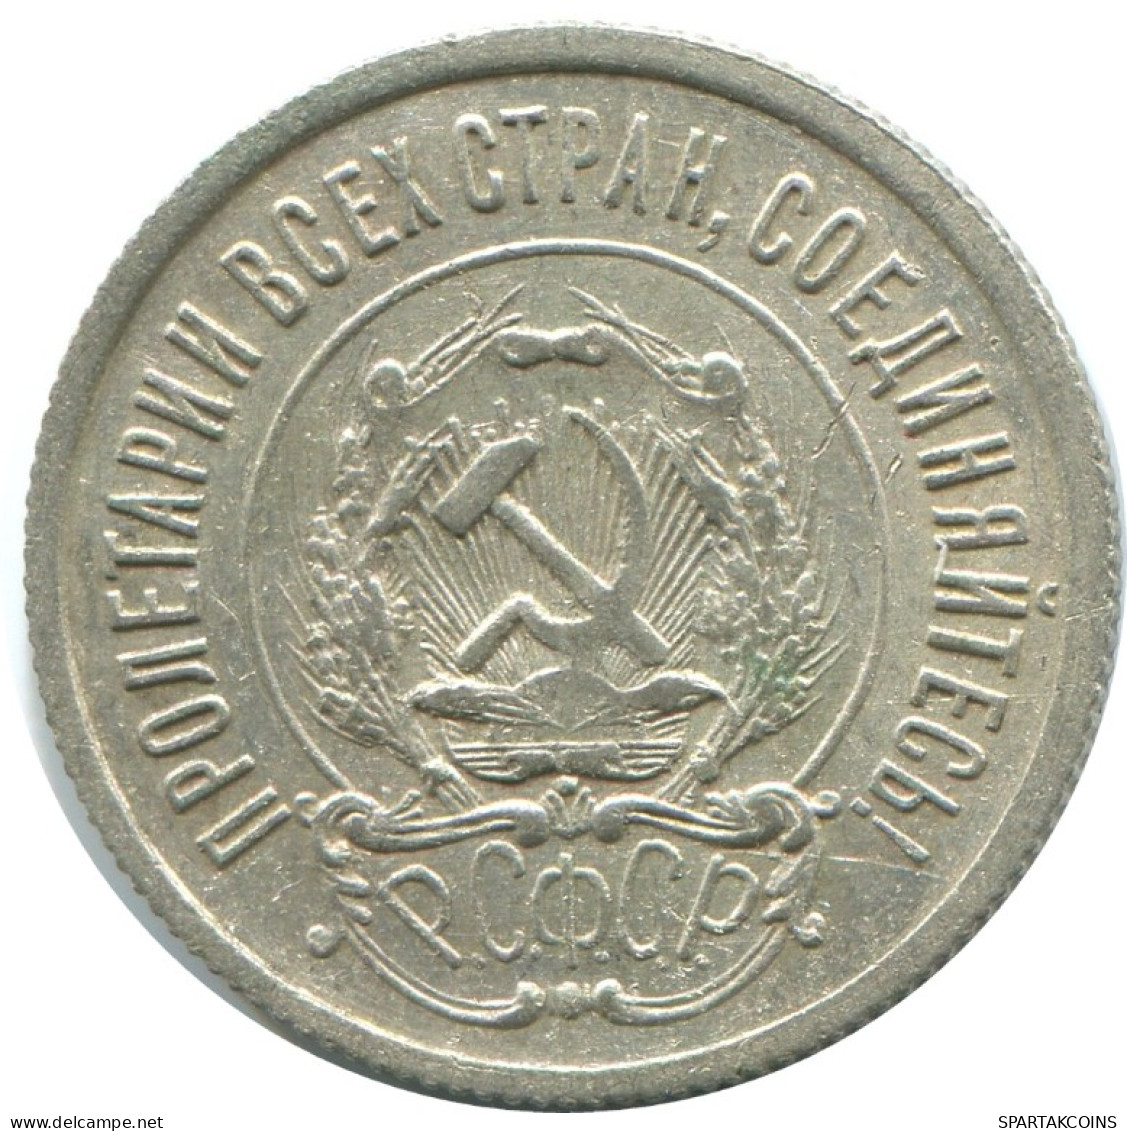 20 KOPEKS 1923 RUSSIA RSFSR SILVER Coin HIGH GRADE #AF550.4.U.A - Russia